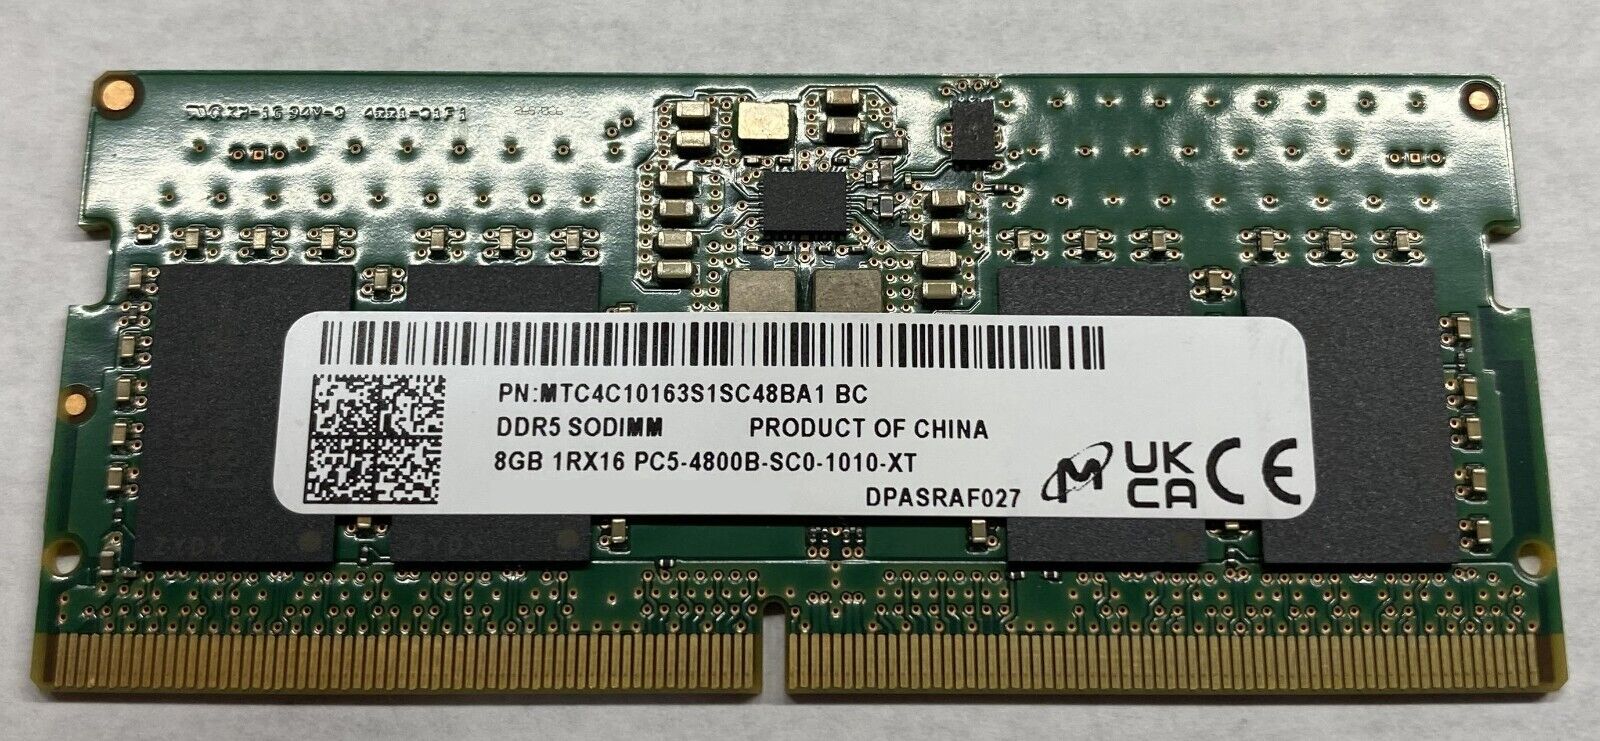 OEM Micron 8GB, PC5-4800B DDR5 Sodimm, , RAM/Memory  (MTC4C10163S1SC48BA1-BC)